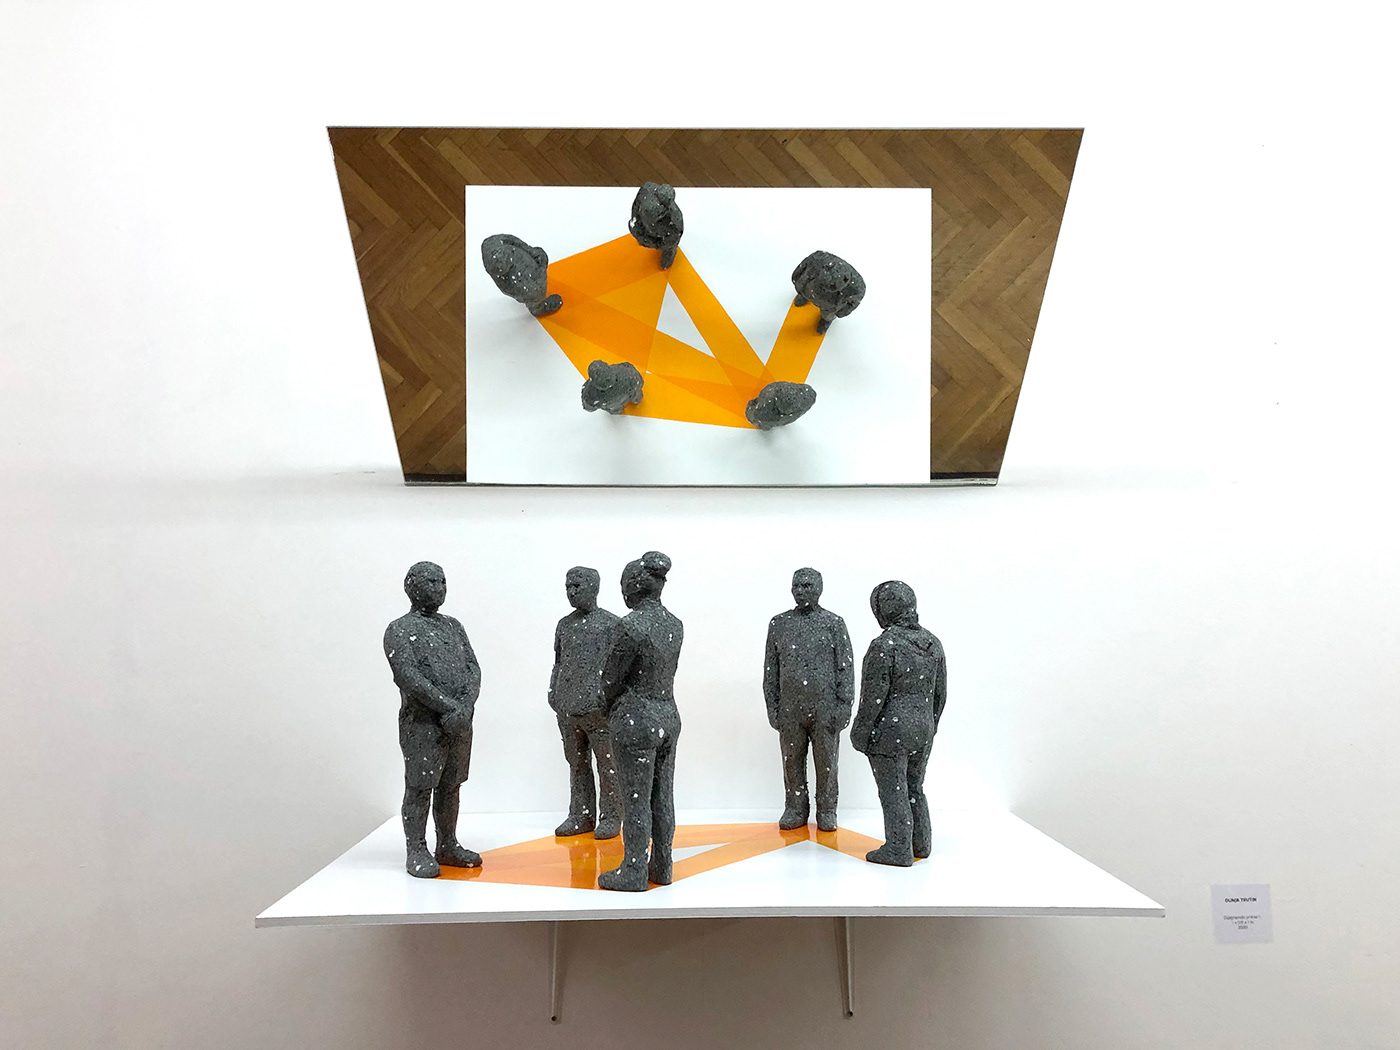 communication diagram distance installation mirror people polystyrene sculpture social network